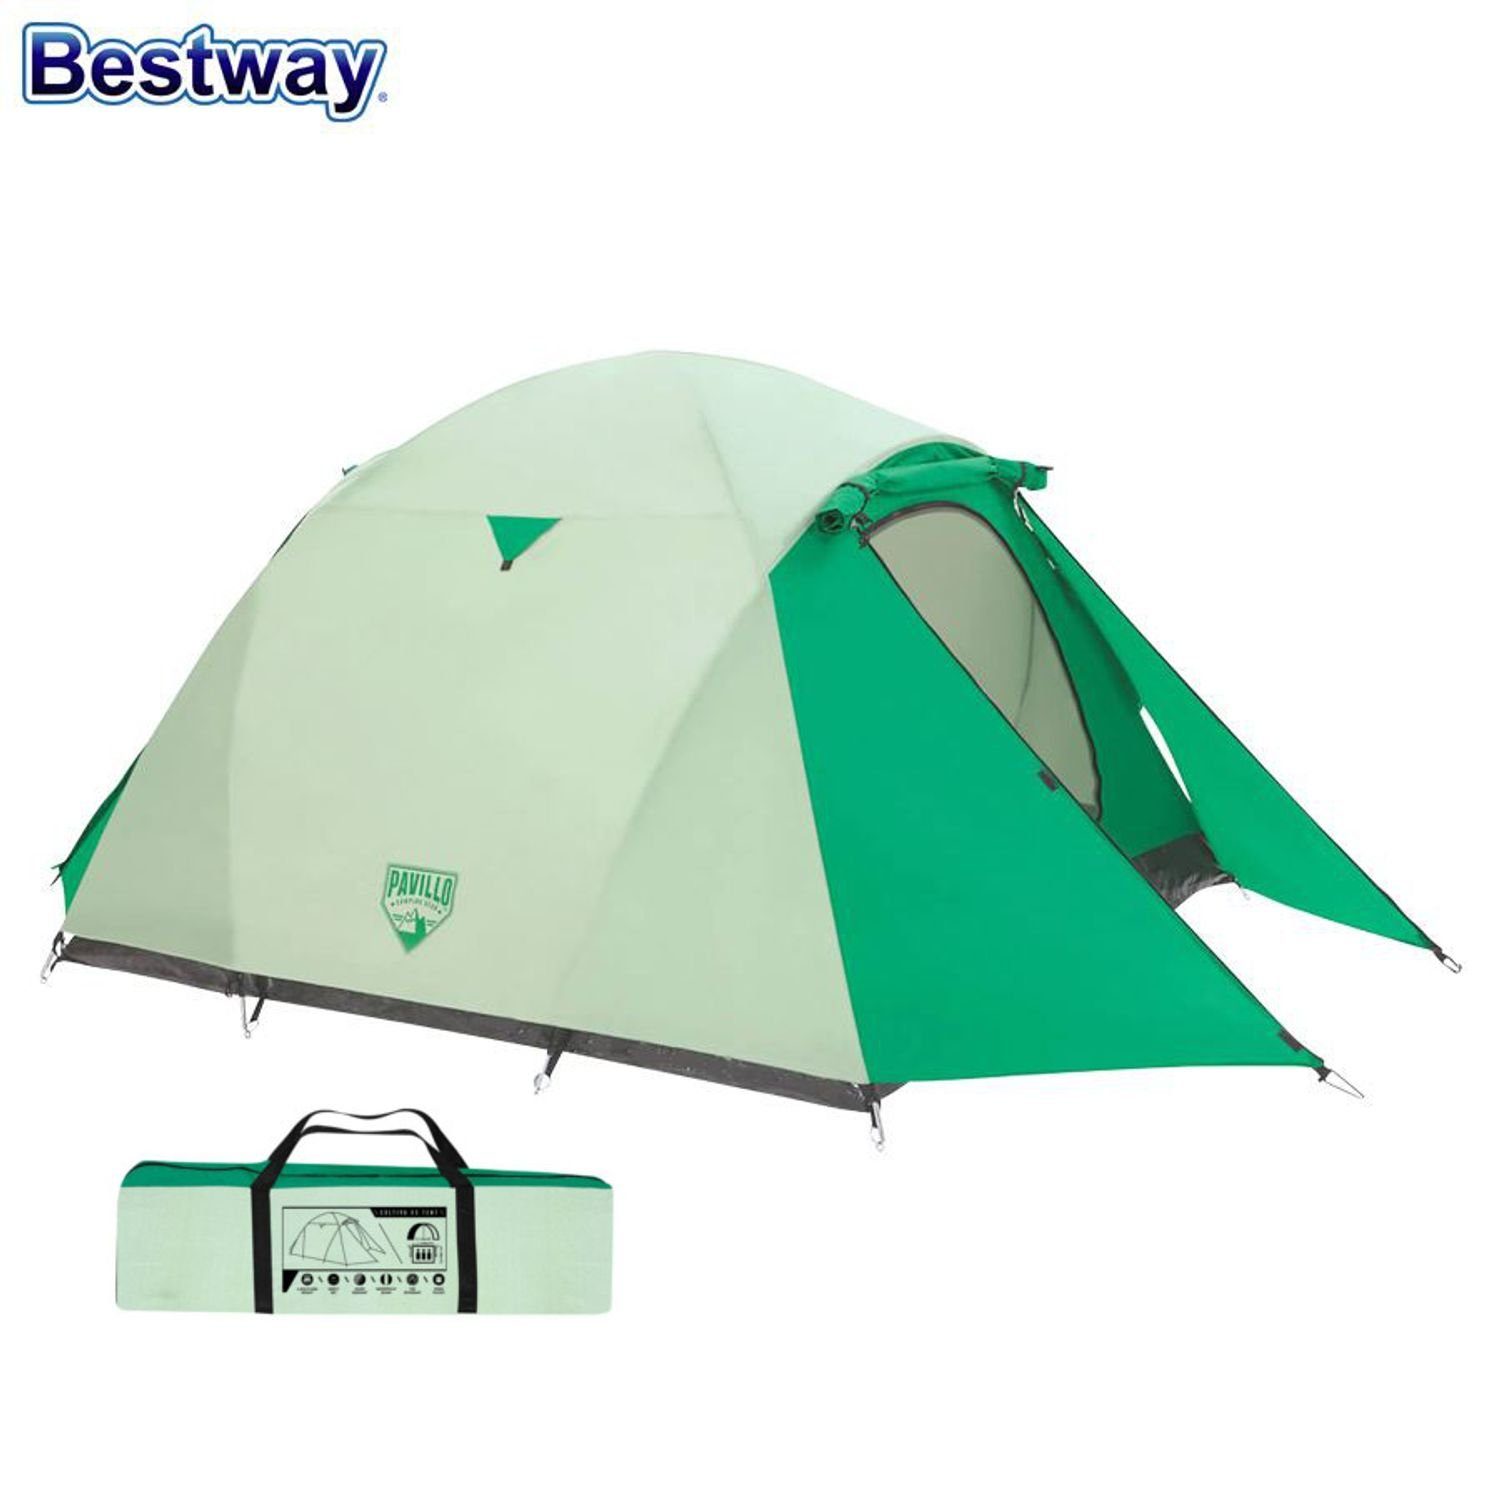 Kuppelzelt Campingzelt Bestway Bestway Cultiva Kuppelzelt Trekking 3 X3 Outdoor Igluzelt